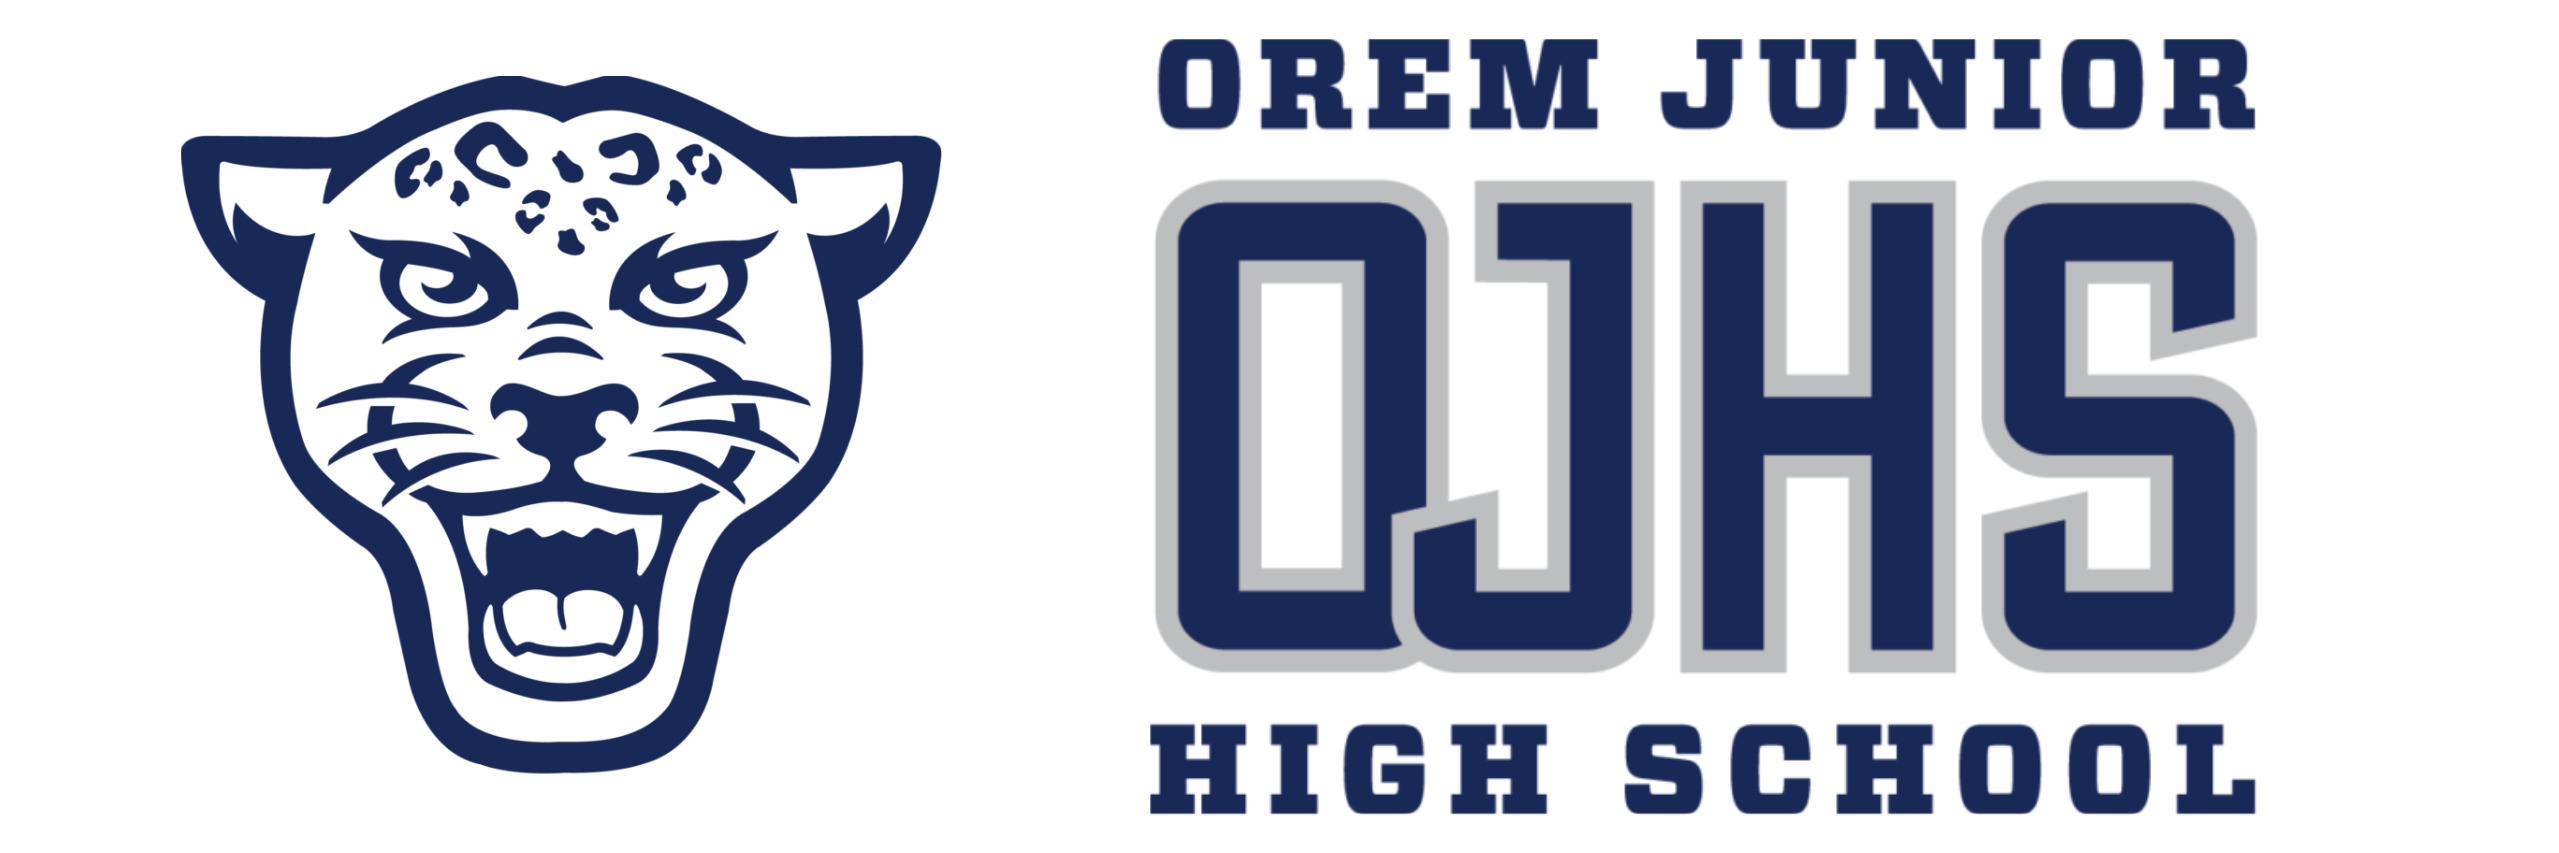 Orem Junior High School